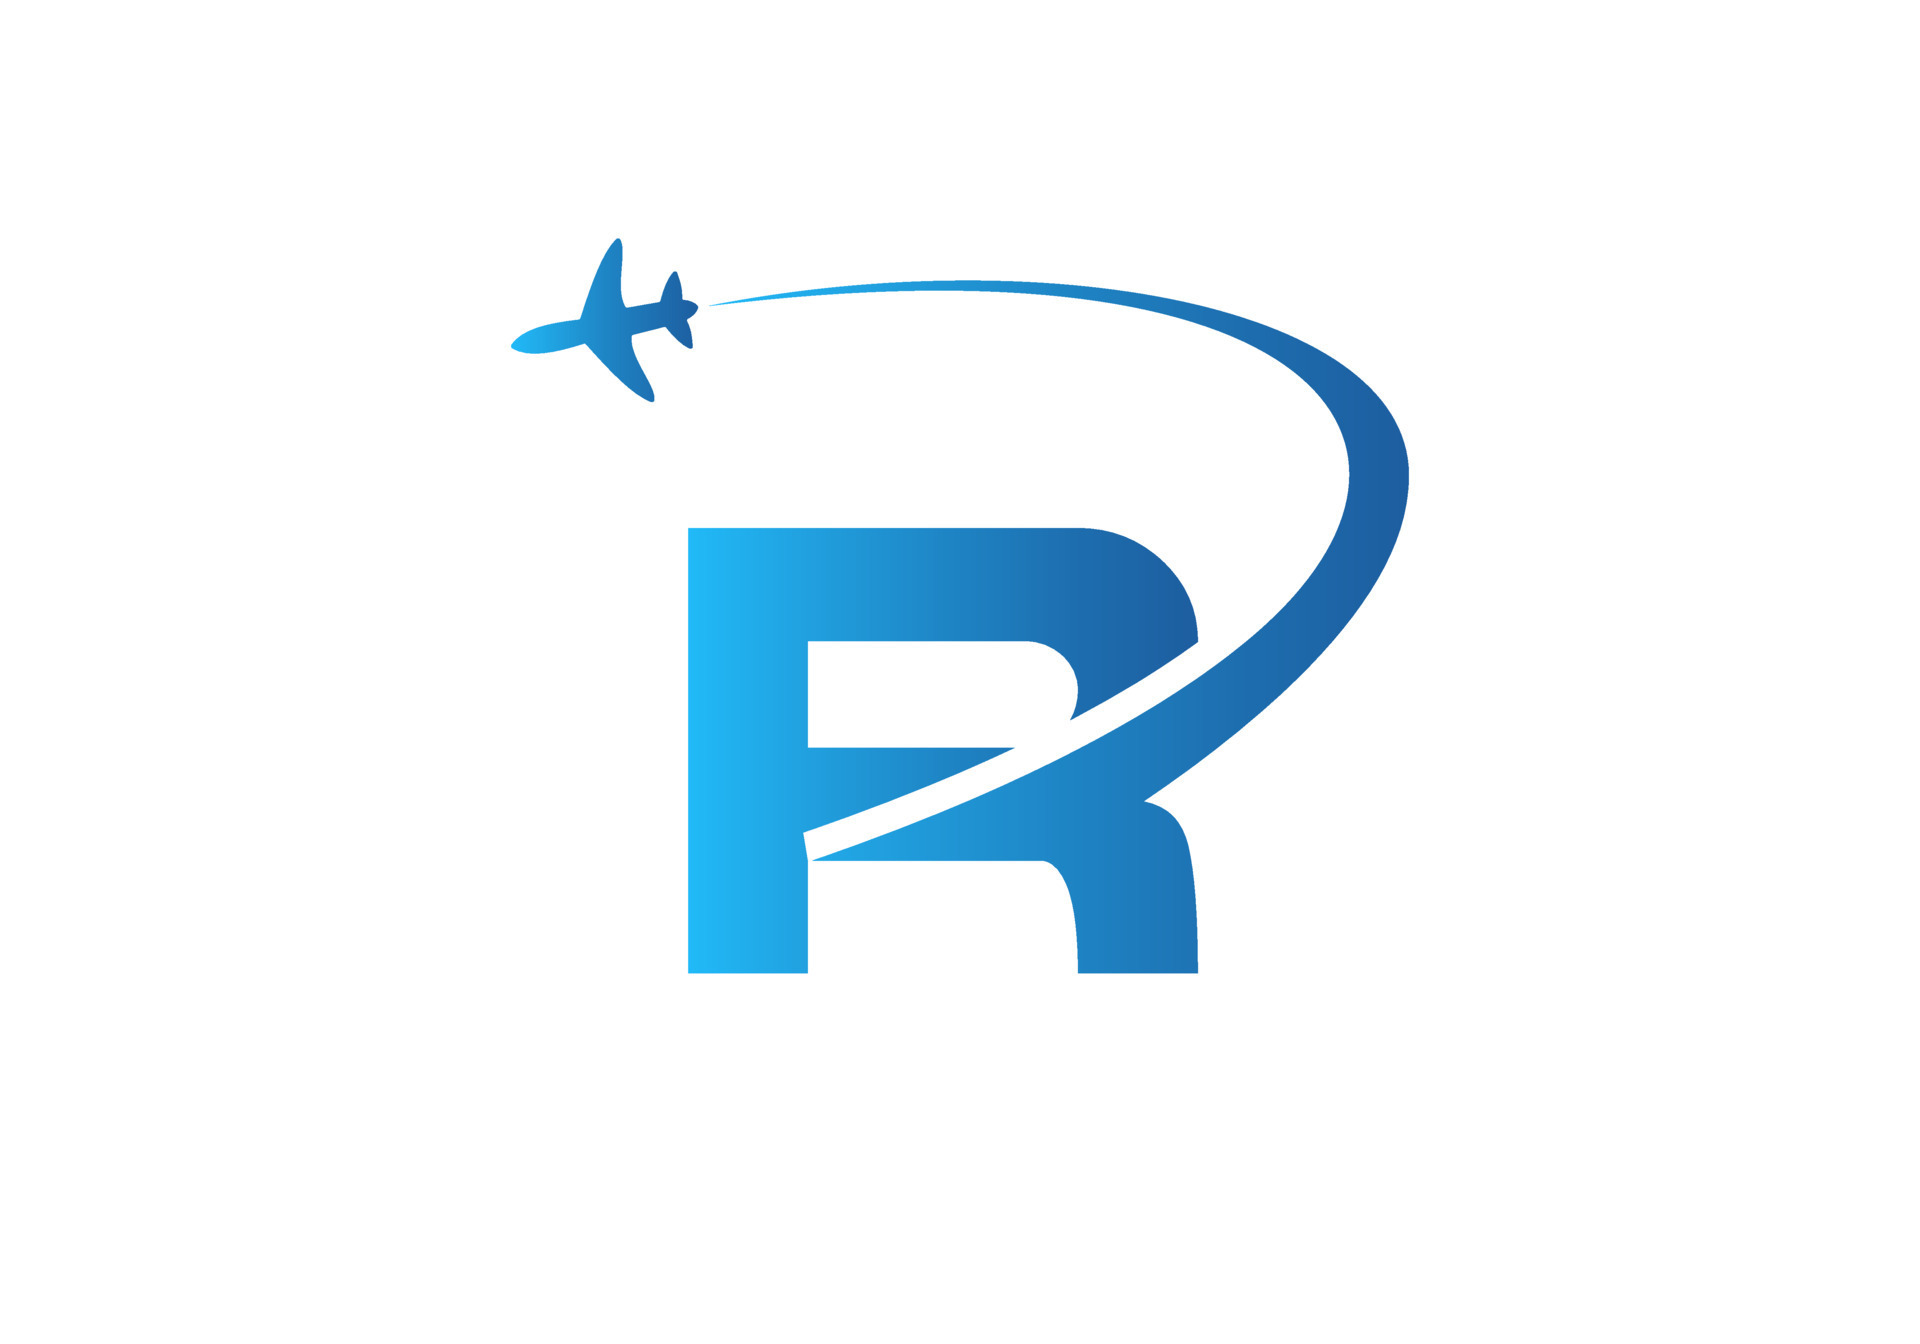 R travel. R Travel logo. Cross Air лого. Путешествие с буквами.